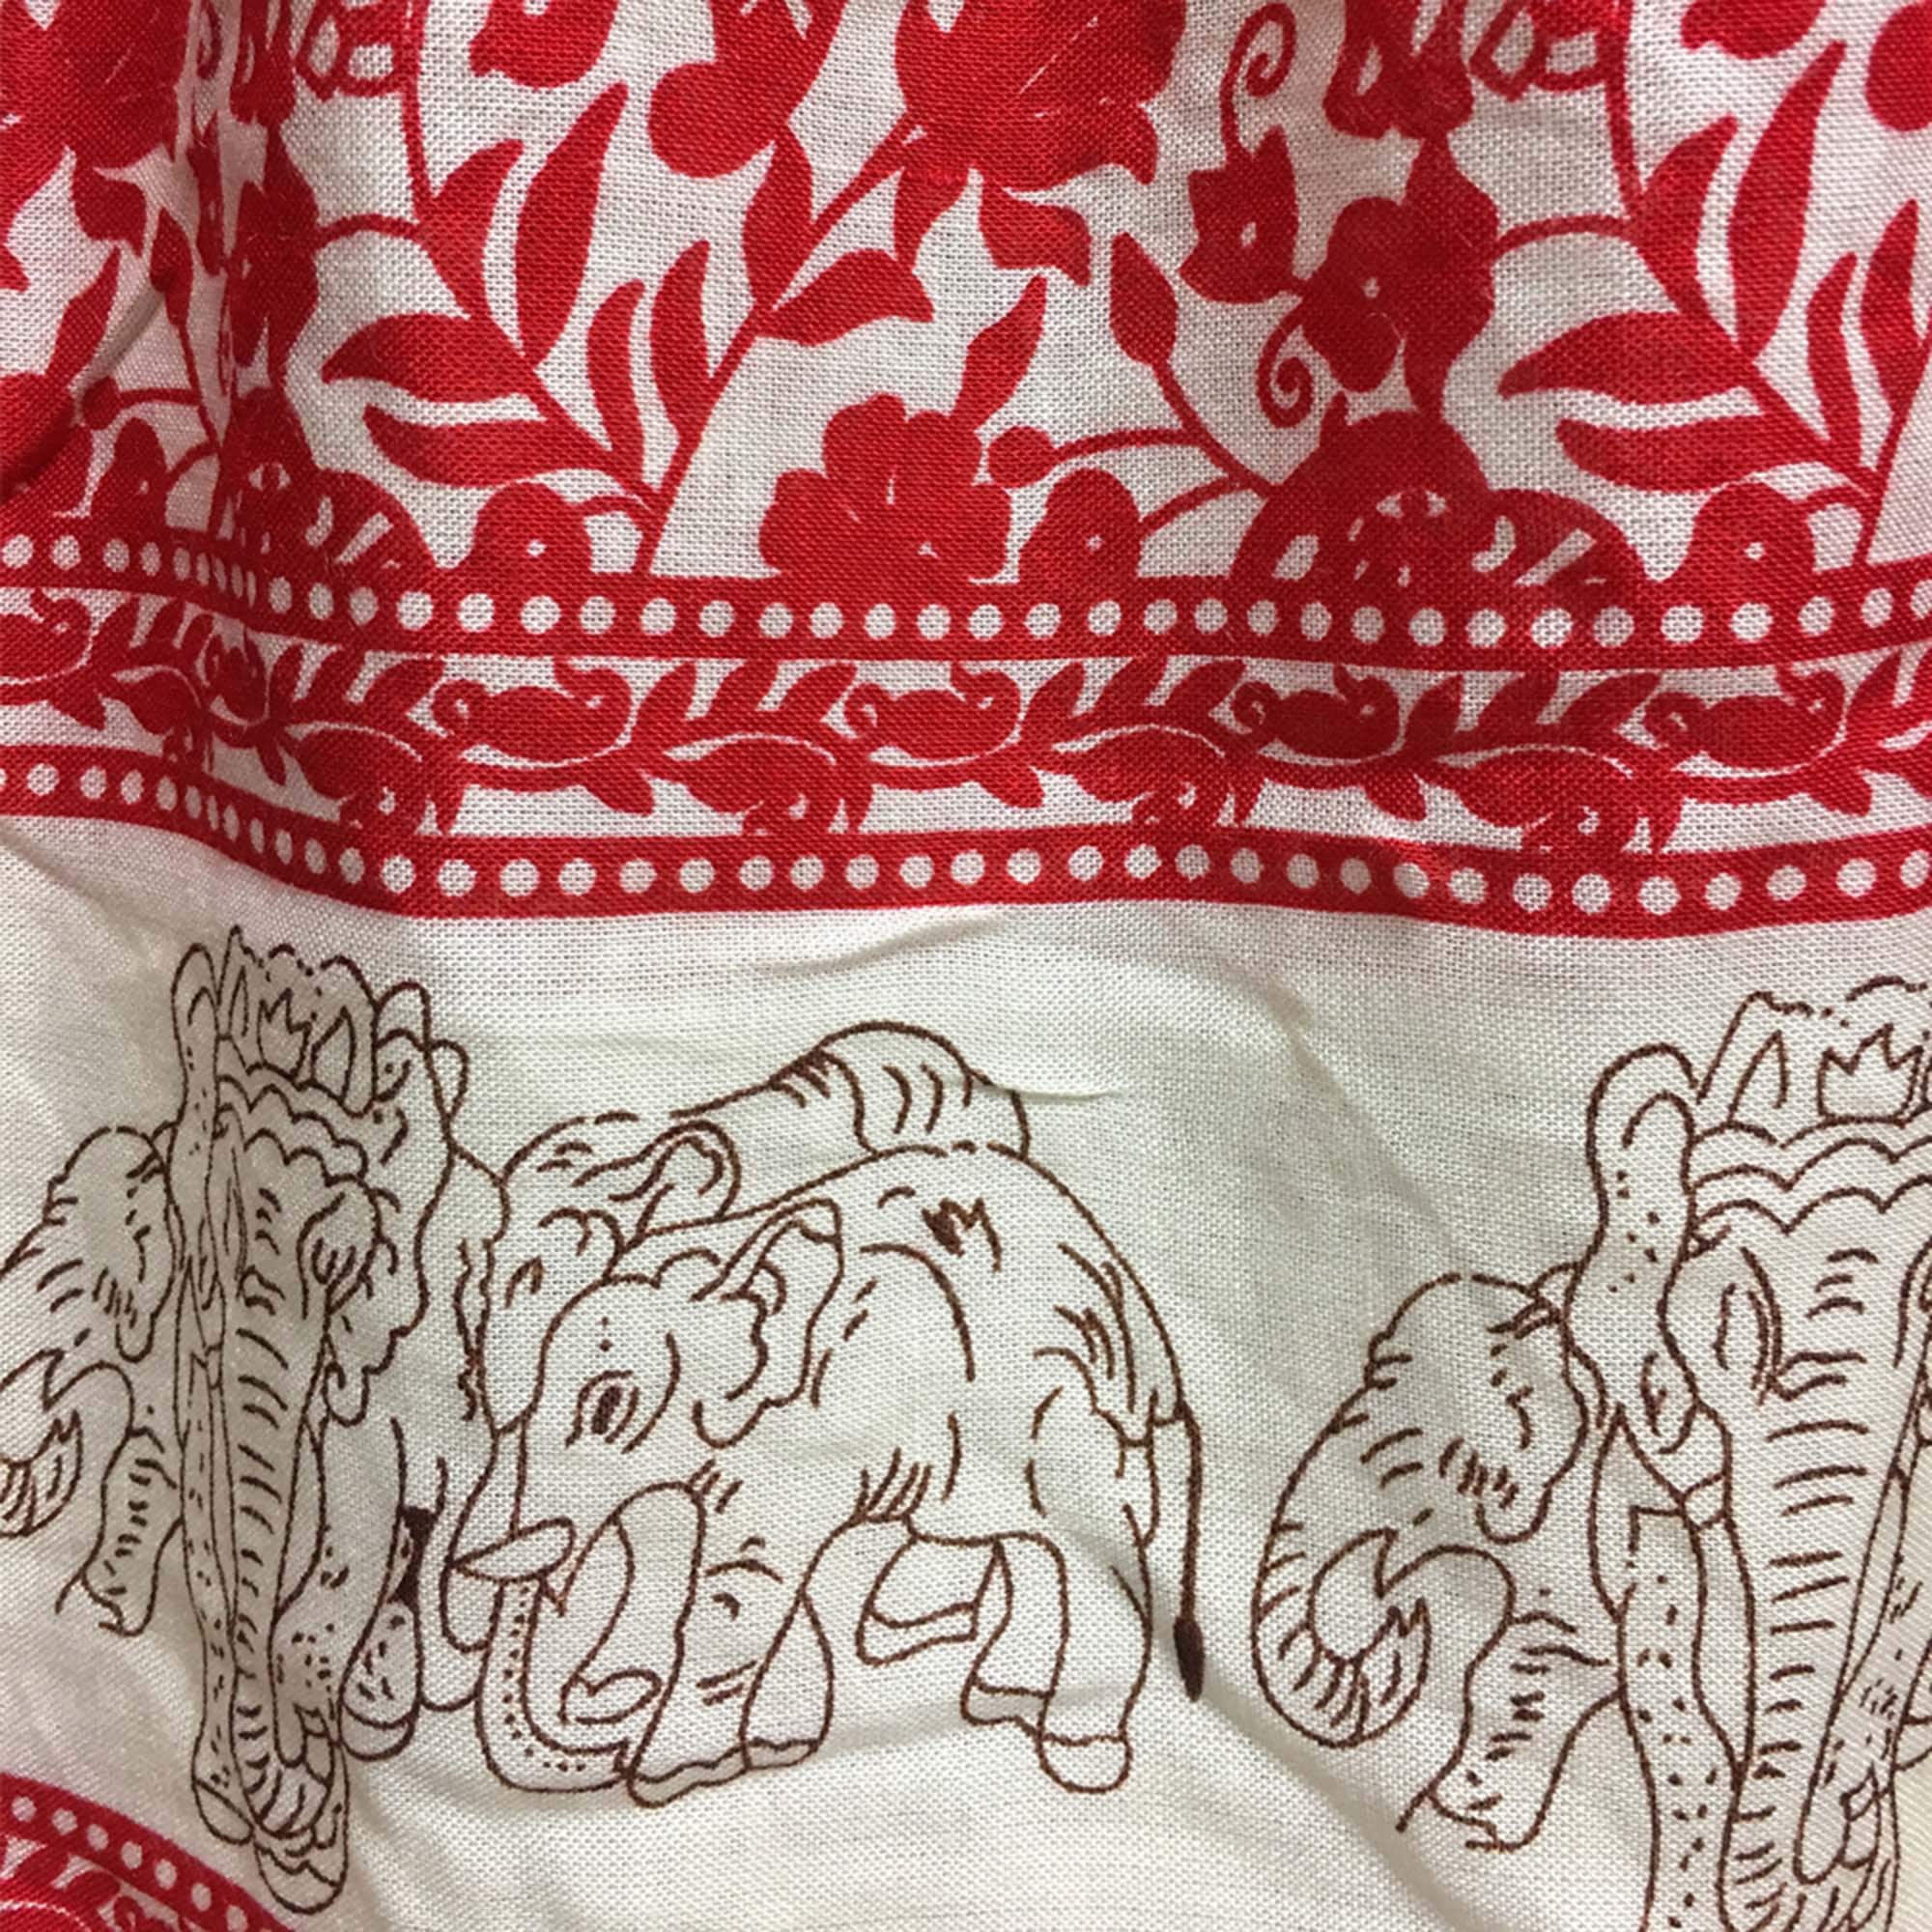 Maya Devi Elephant Harem Pants - Bohemian Island